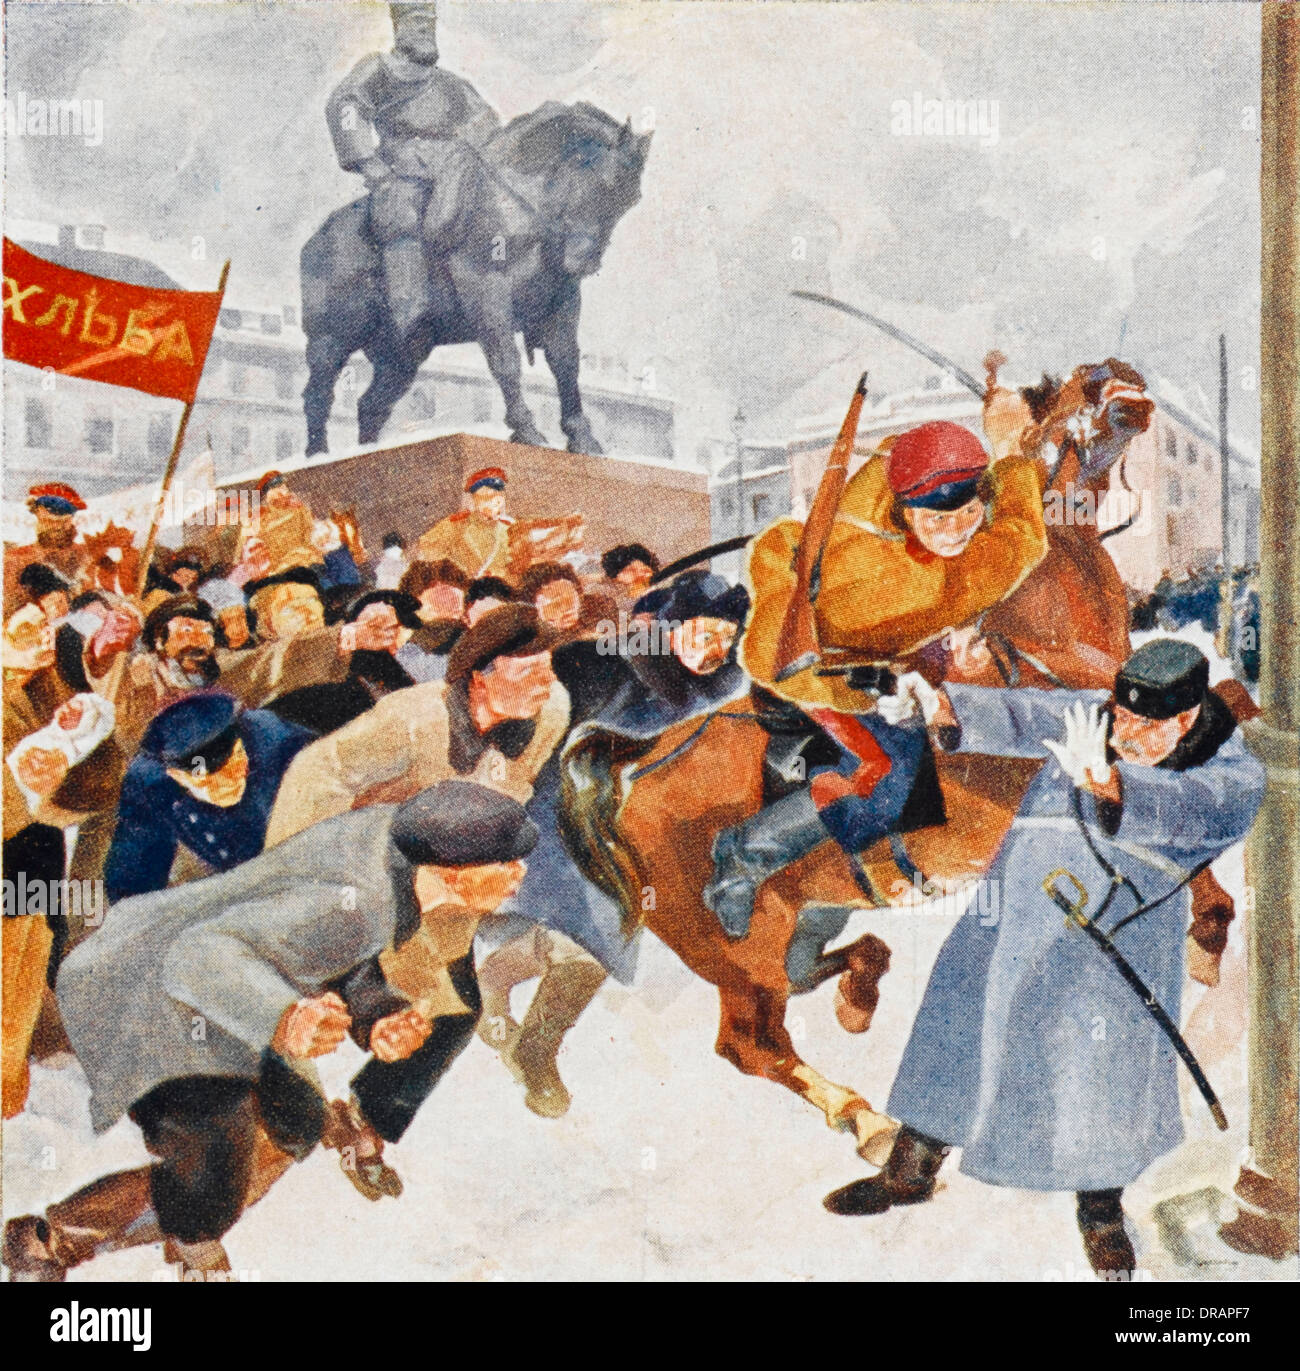 Царский бунт. Революция февраль 1917. Февраль 1917 г. Знаменская площадь. Февральская революция 1917 картины.